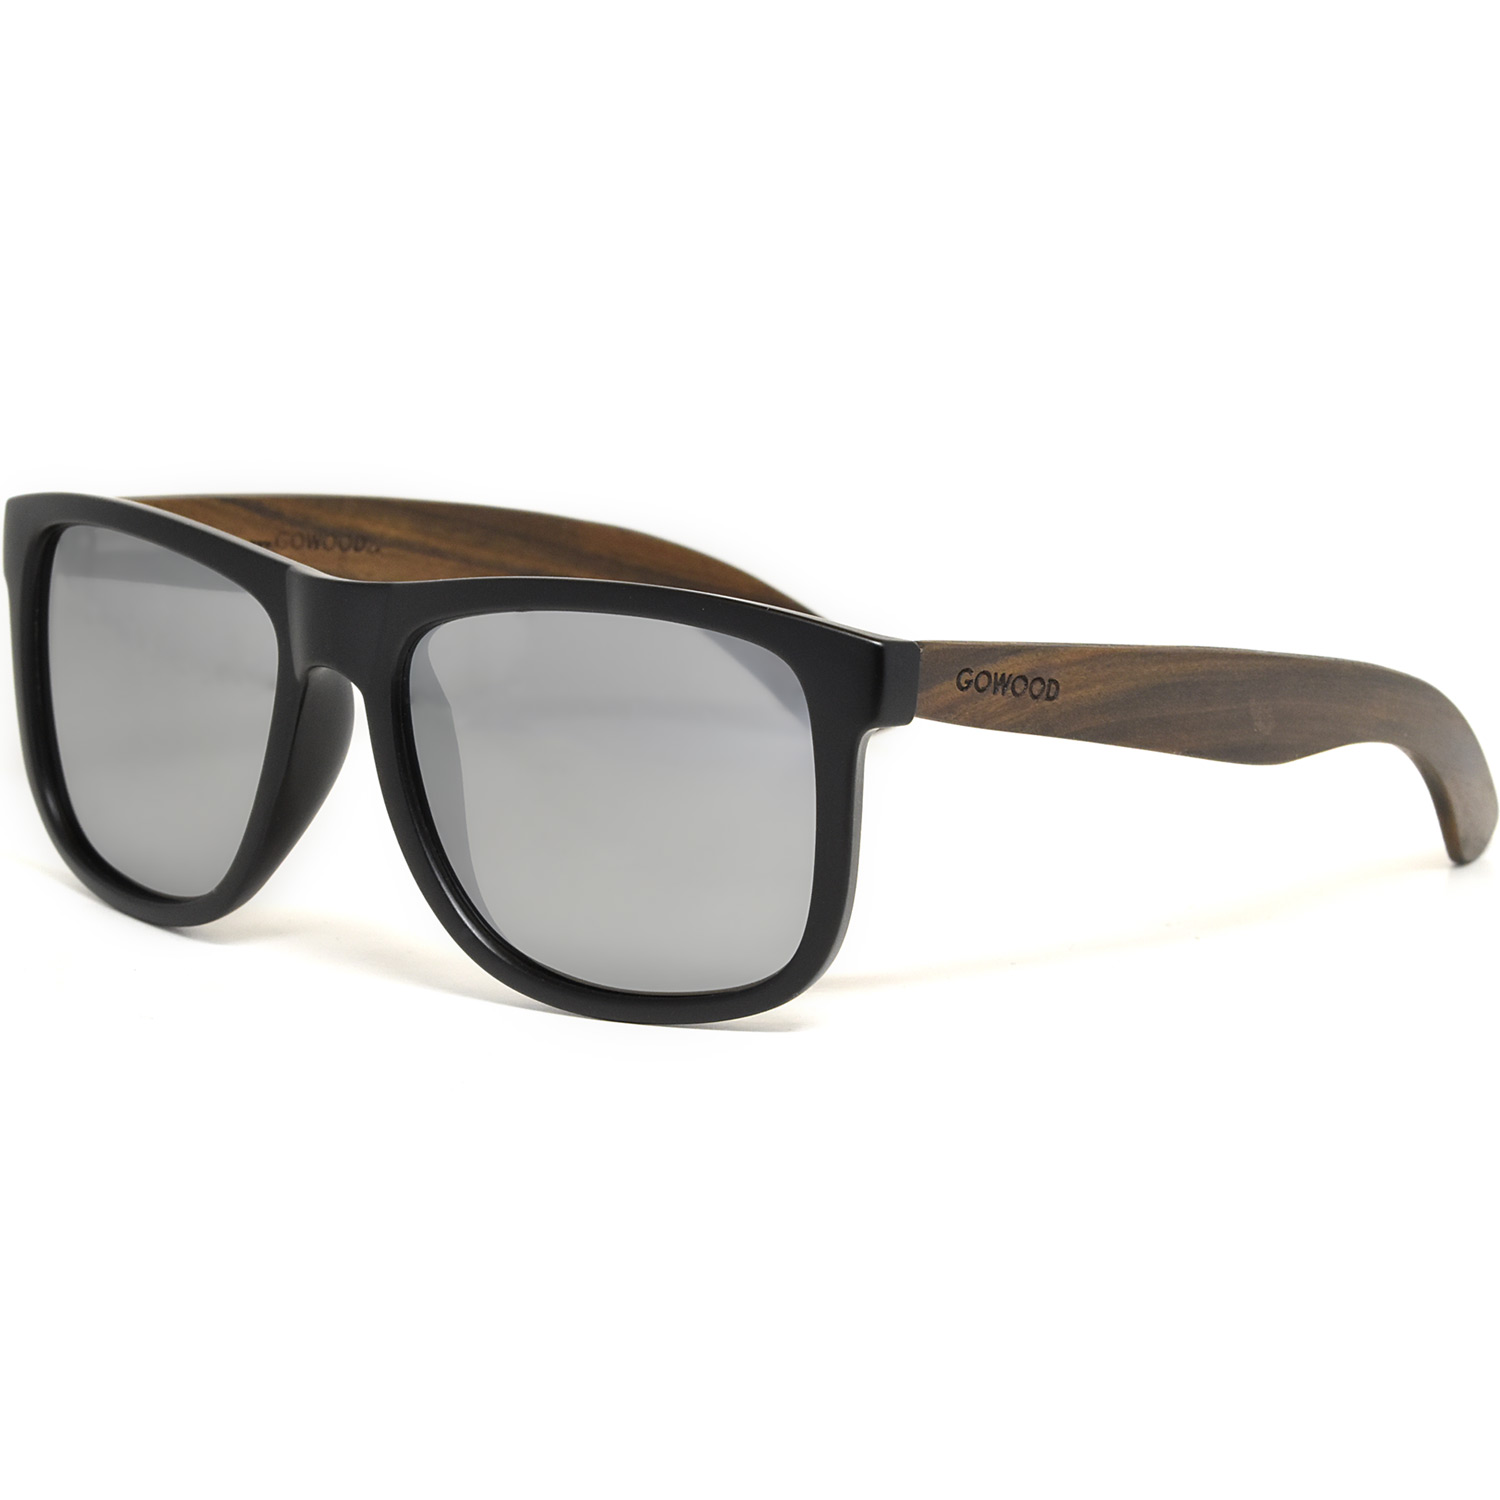 Square ebony wood sunglasses silver mirrored polarized lenses left